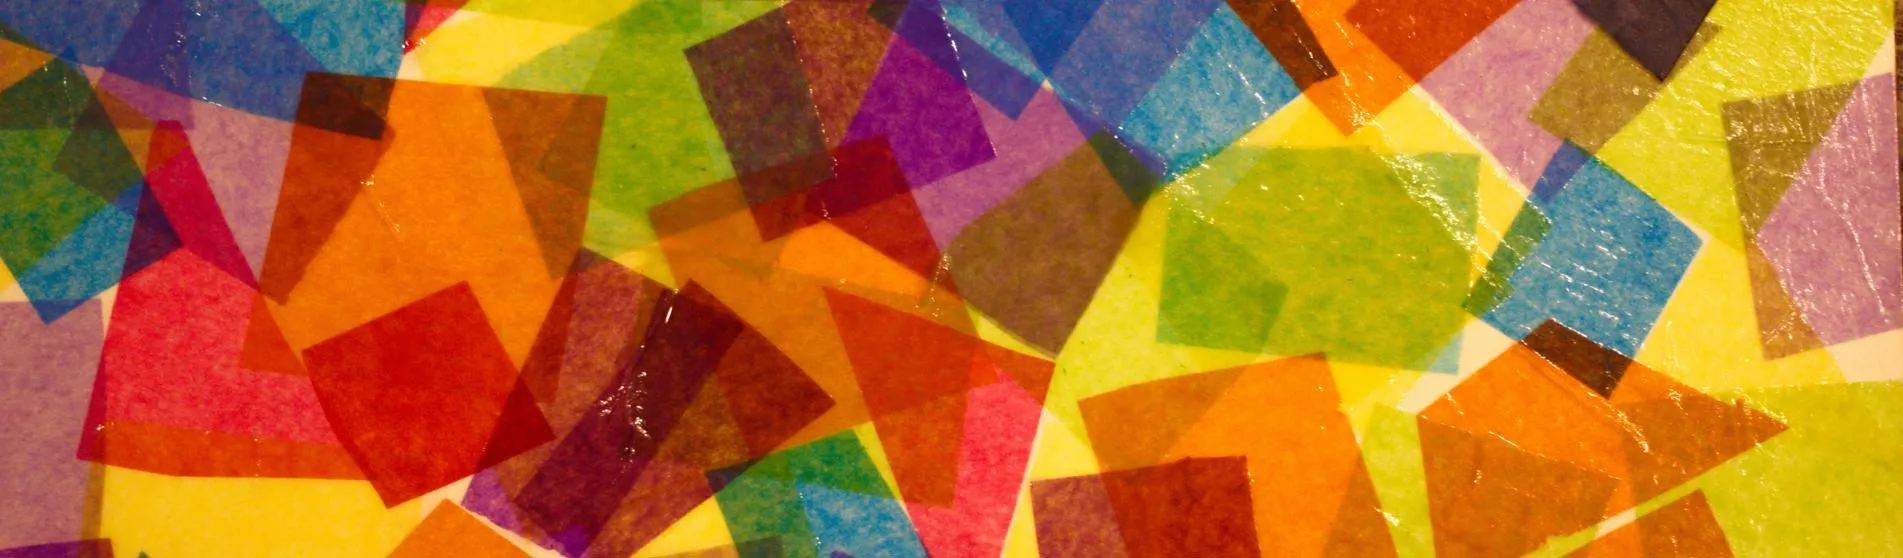 Coloured plastic squares on paper (Image creadit: Joshua Hoehne)